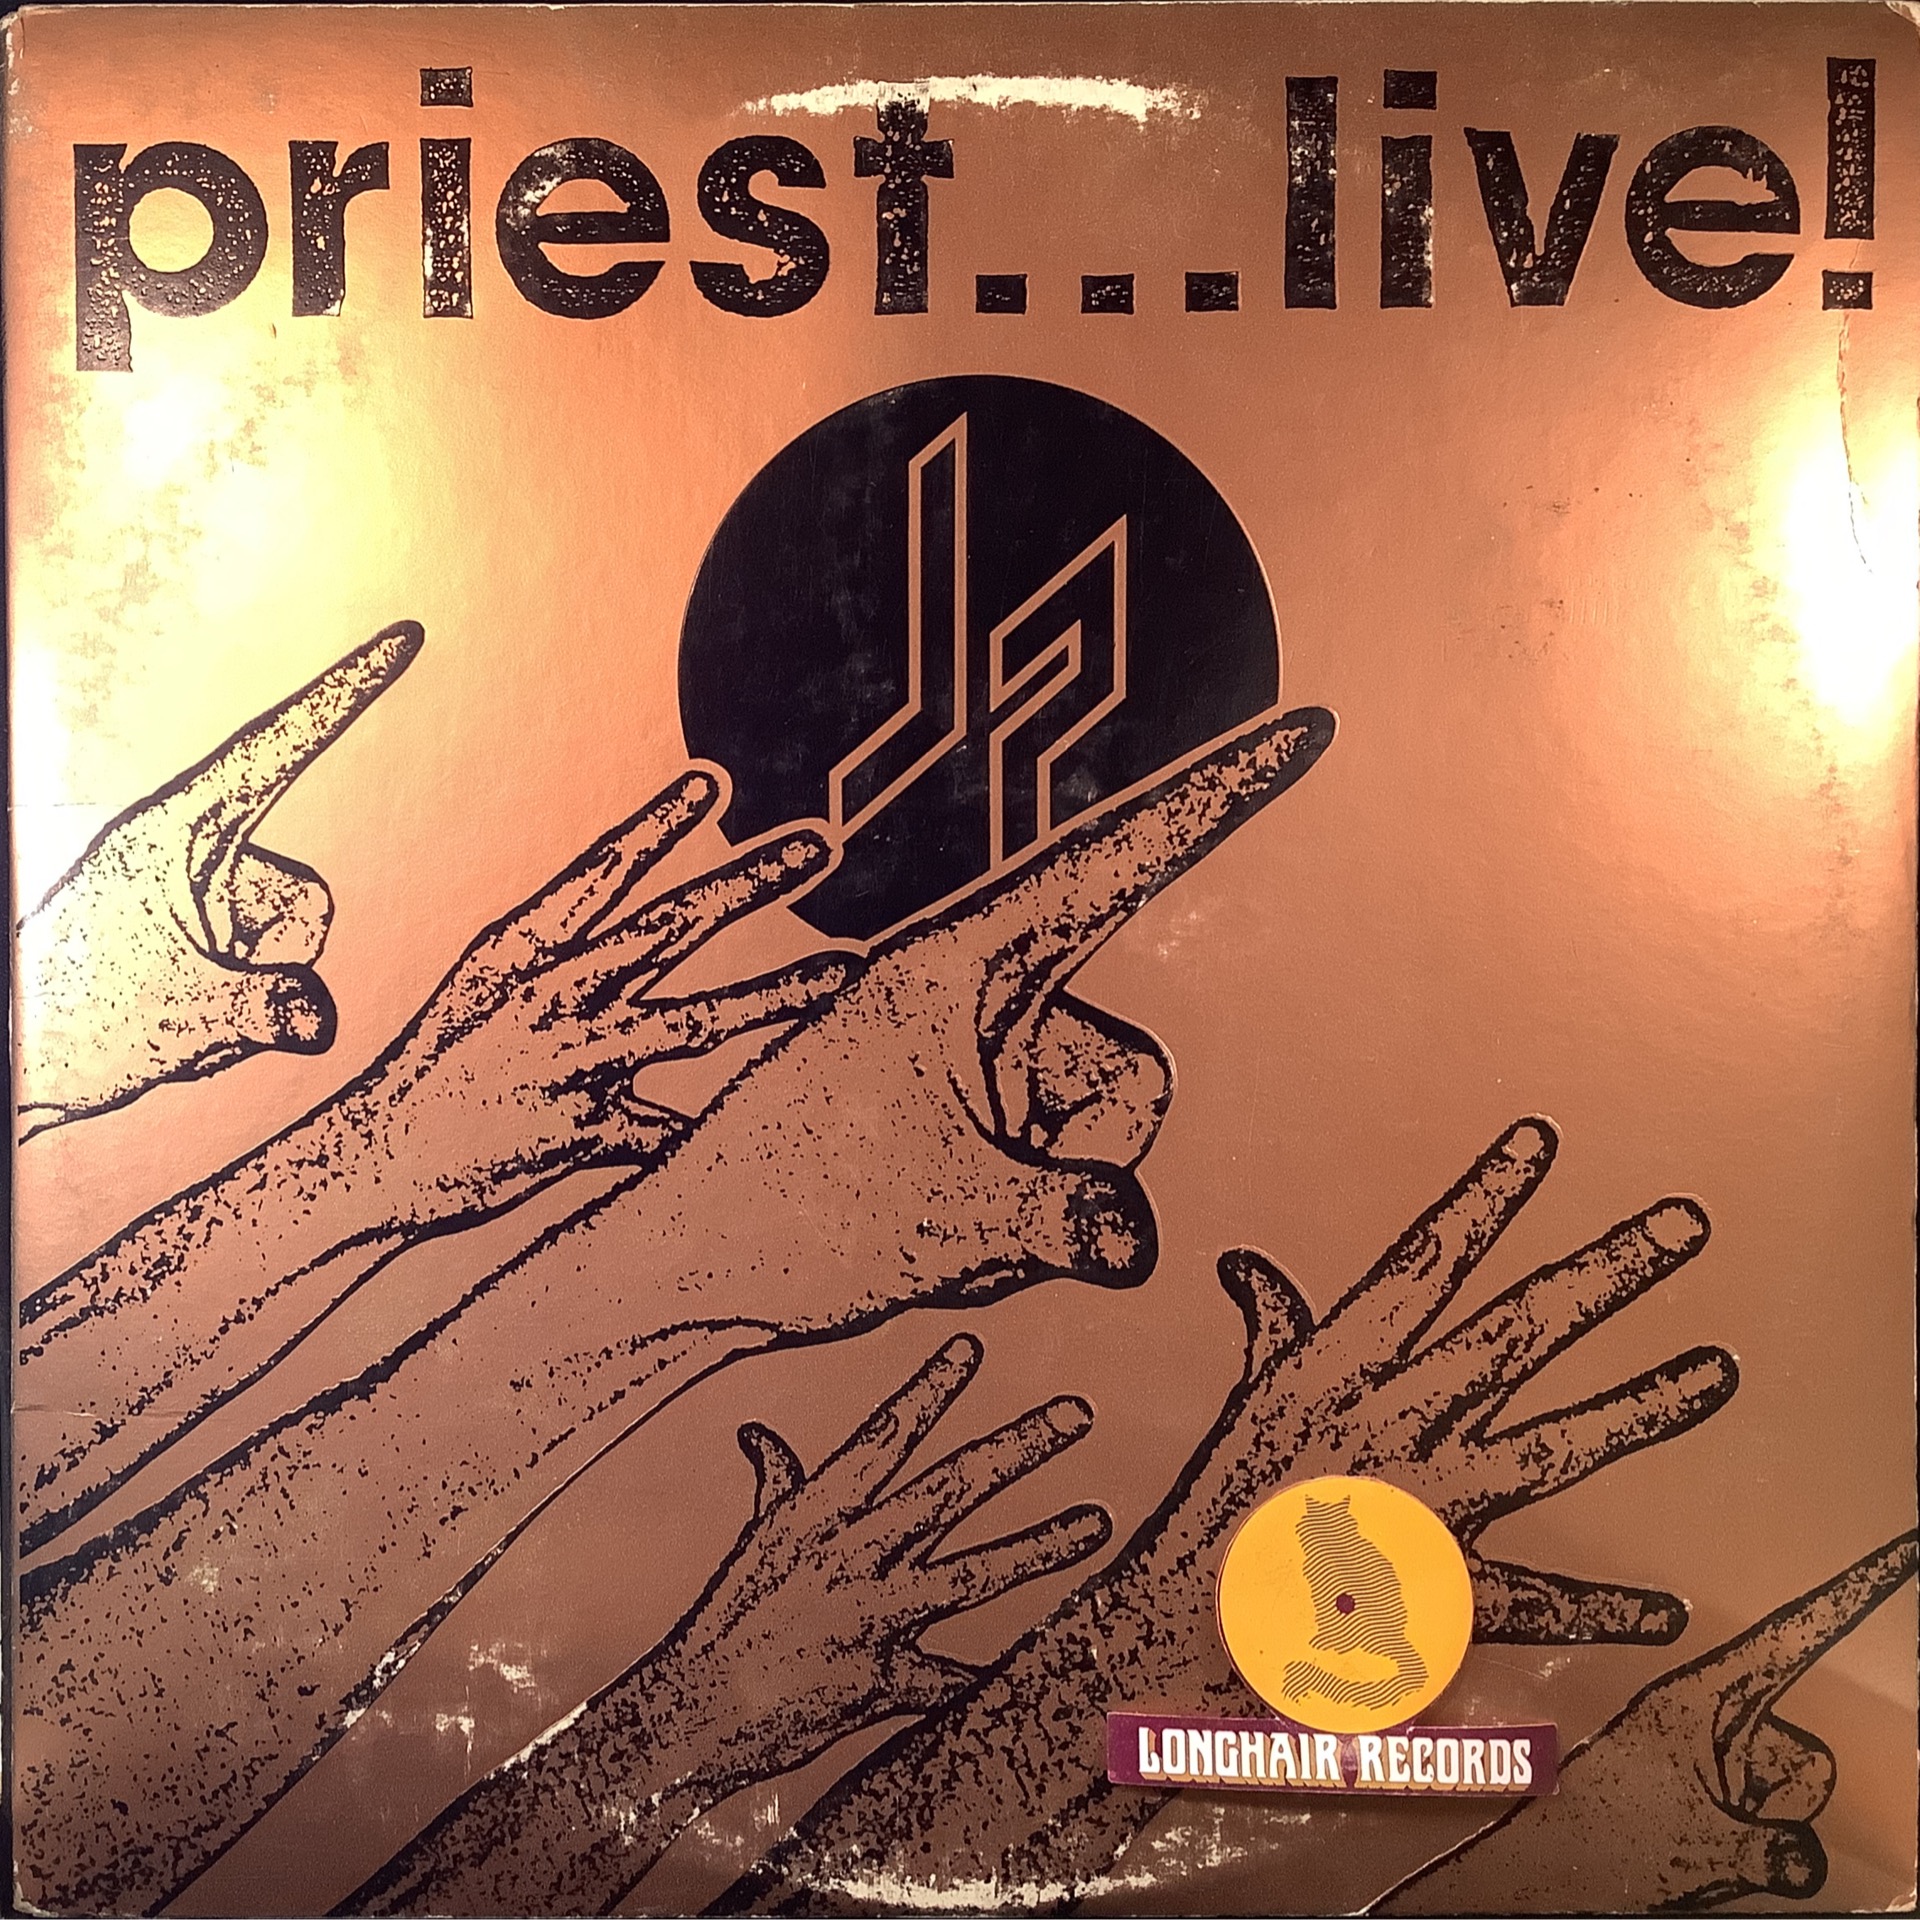 Judas Priest - Priest...Live (VHS, 1987)